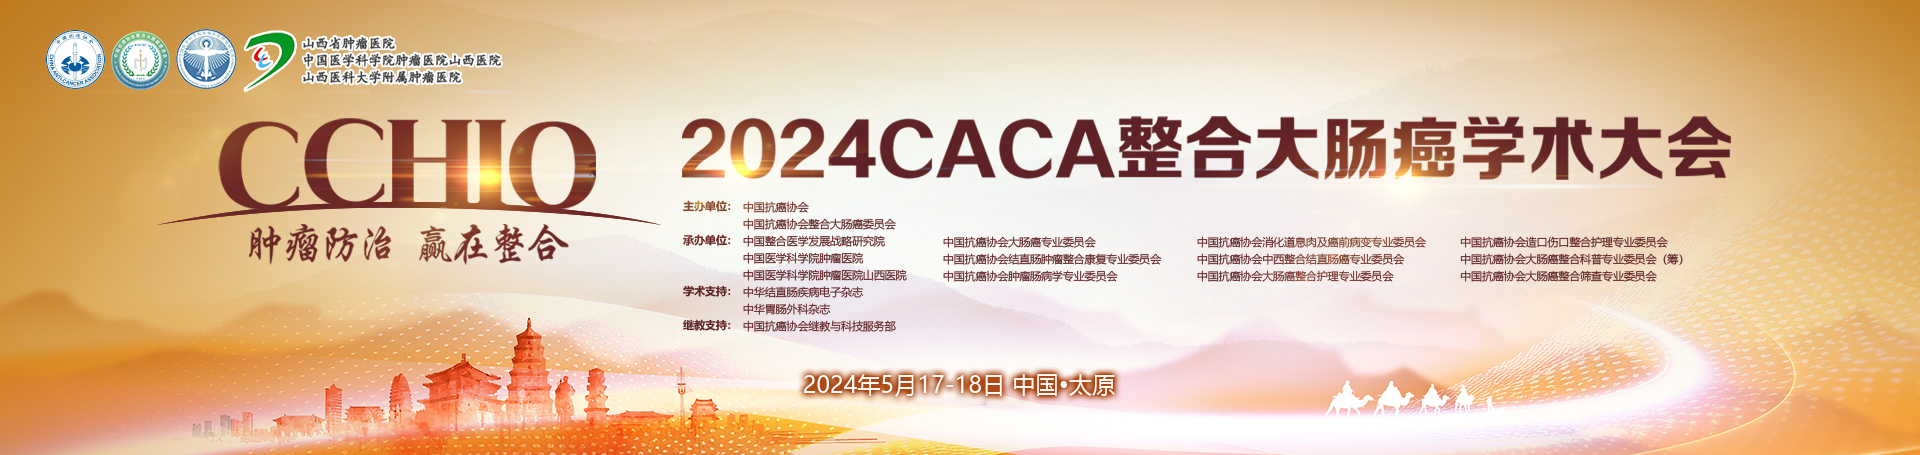 2024CACA整合大肠癌大会